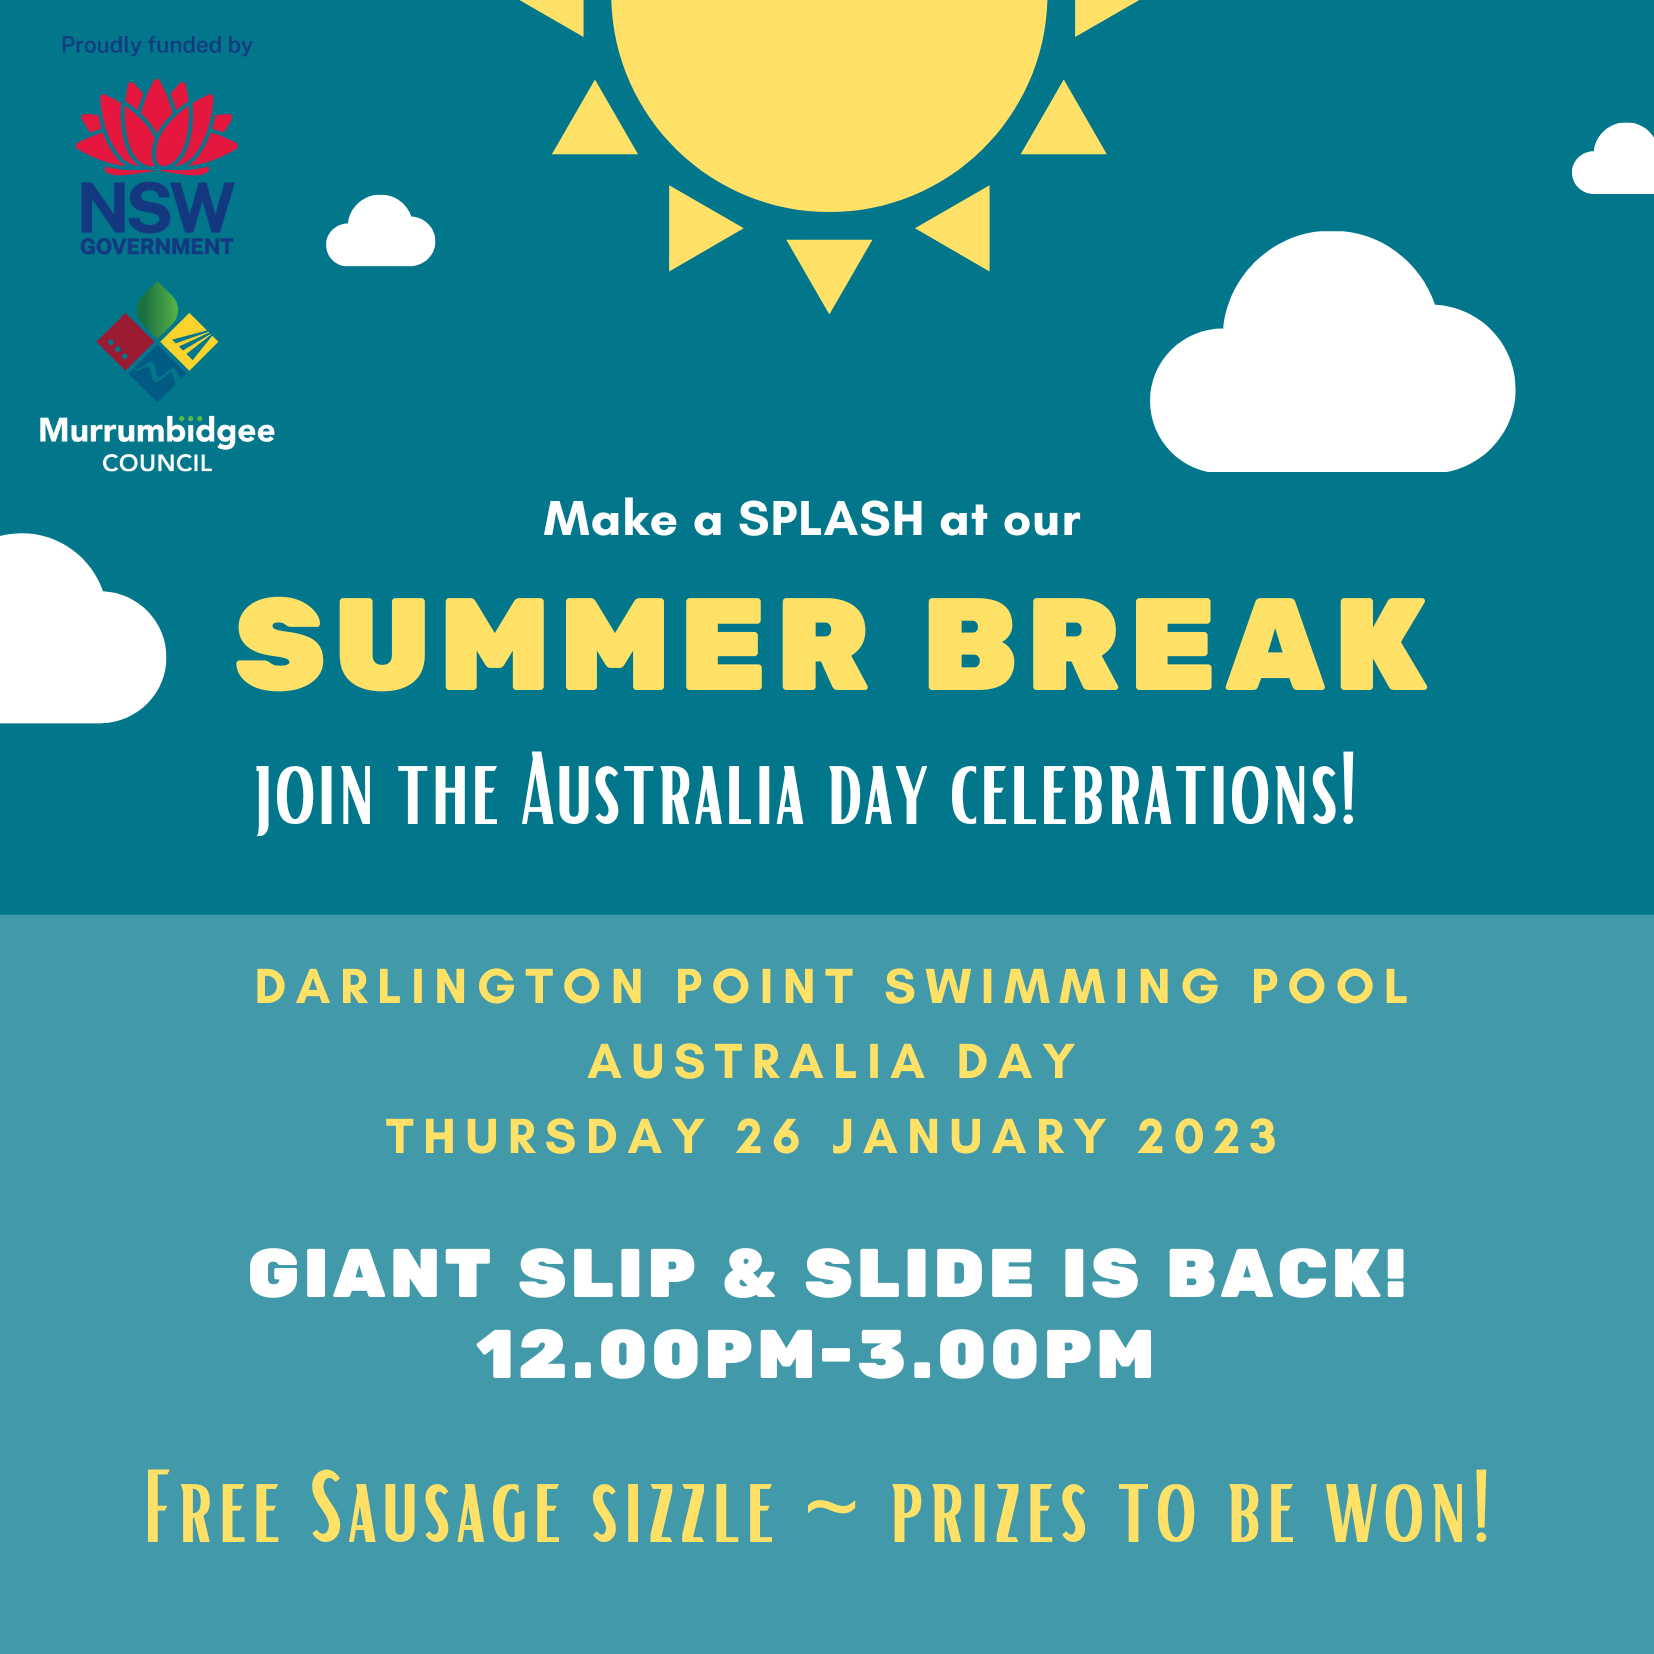 Darlington Point Australia Day Summer Break Pool Party